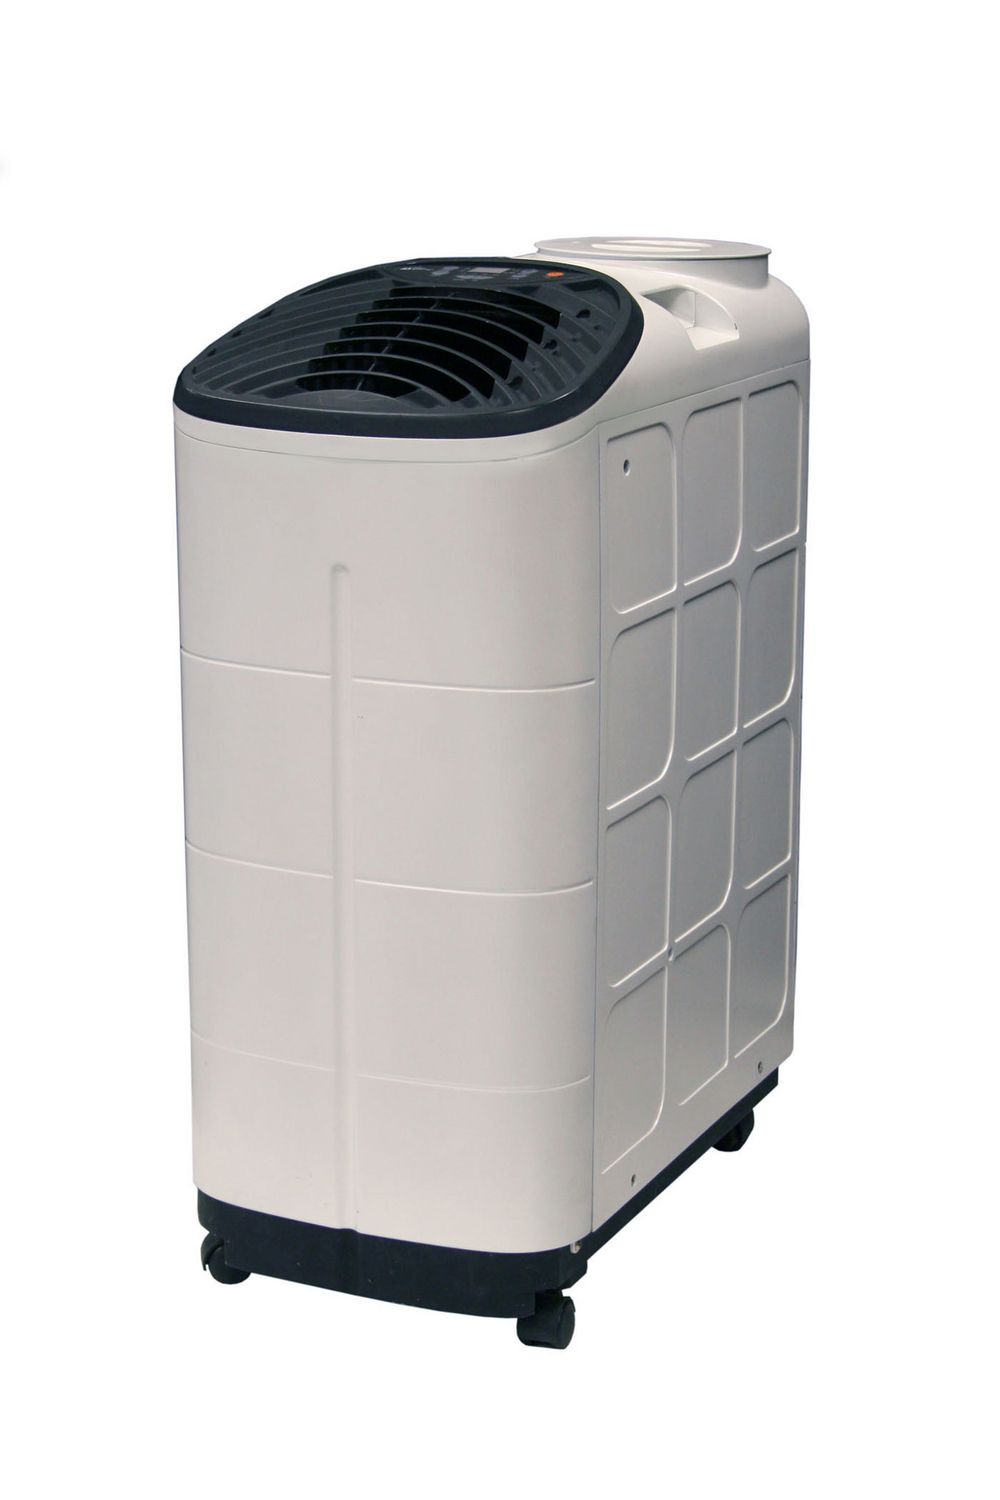 walmart air conditioner sale